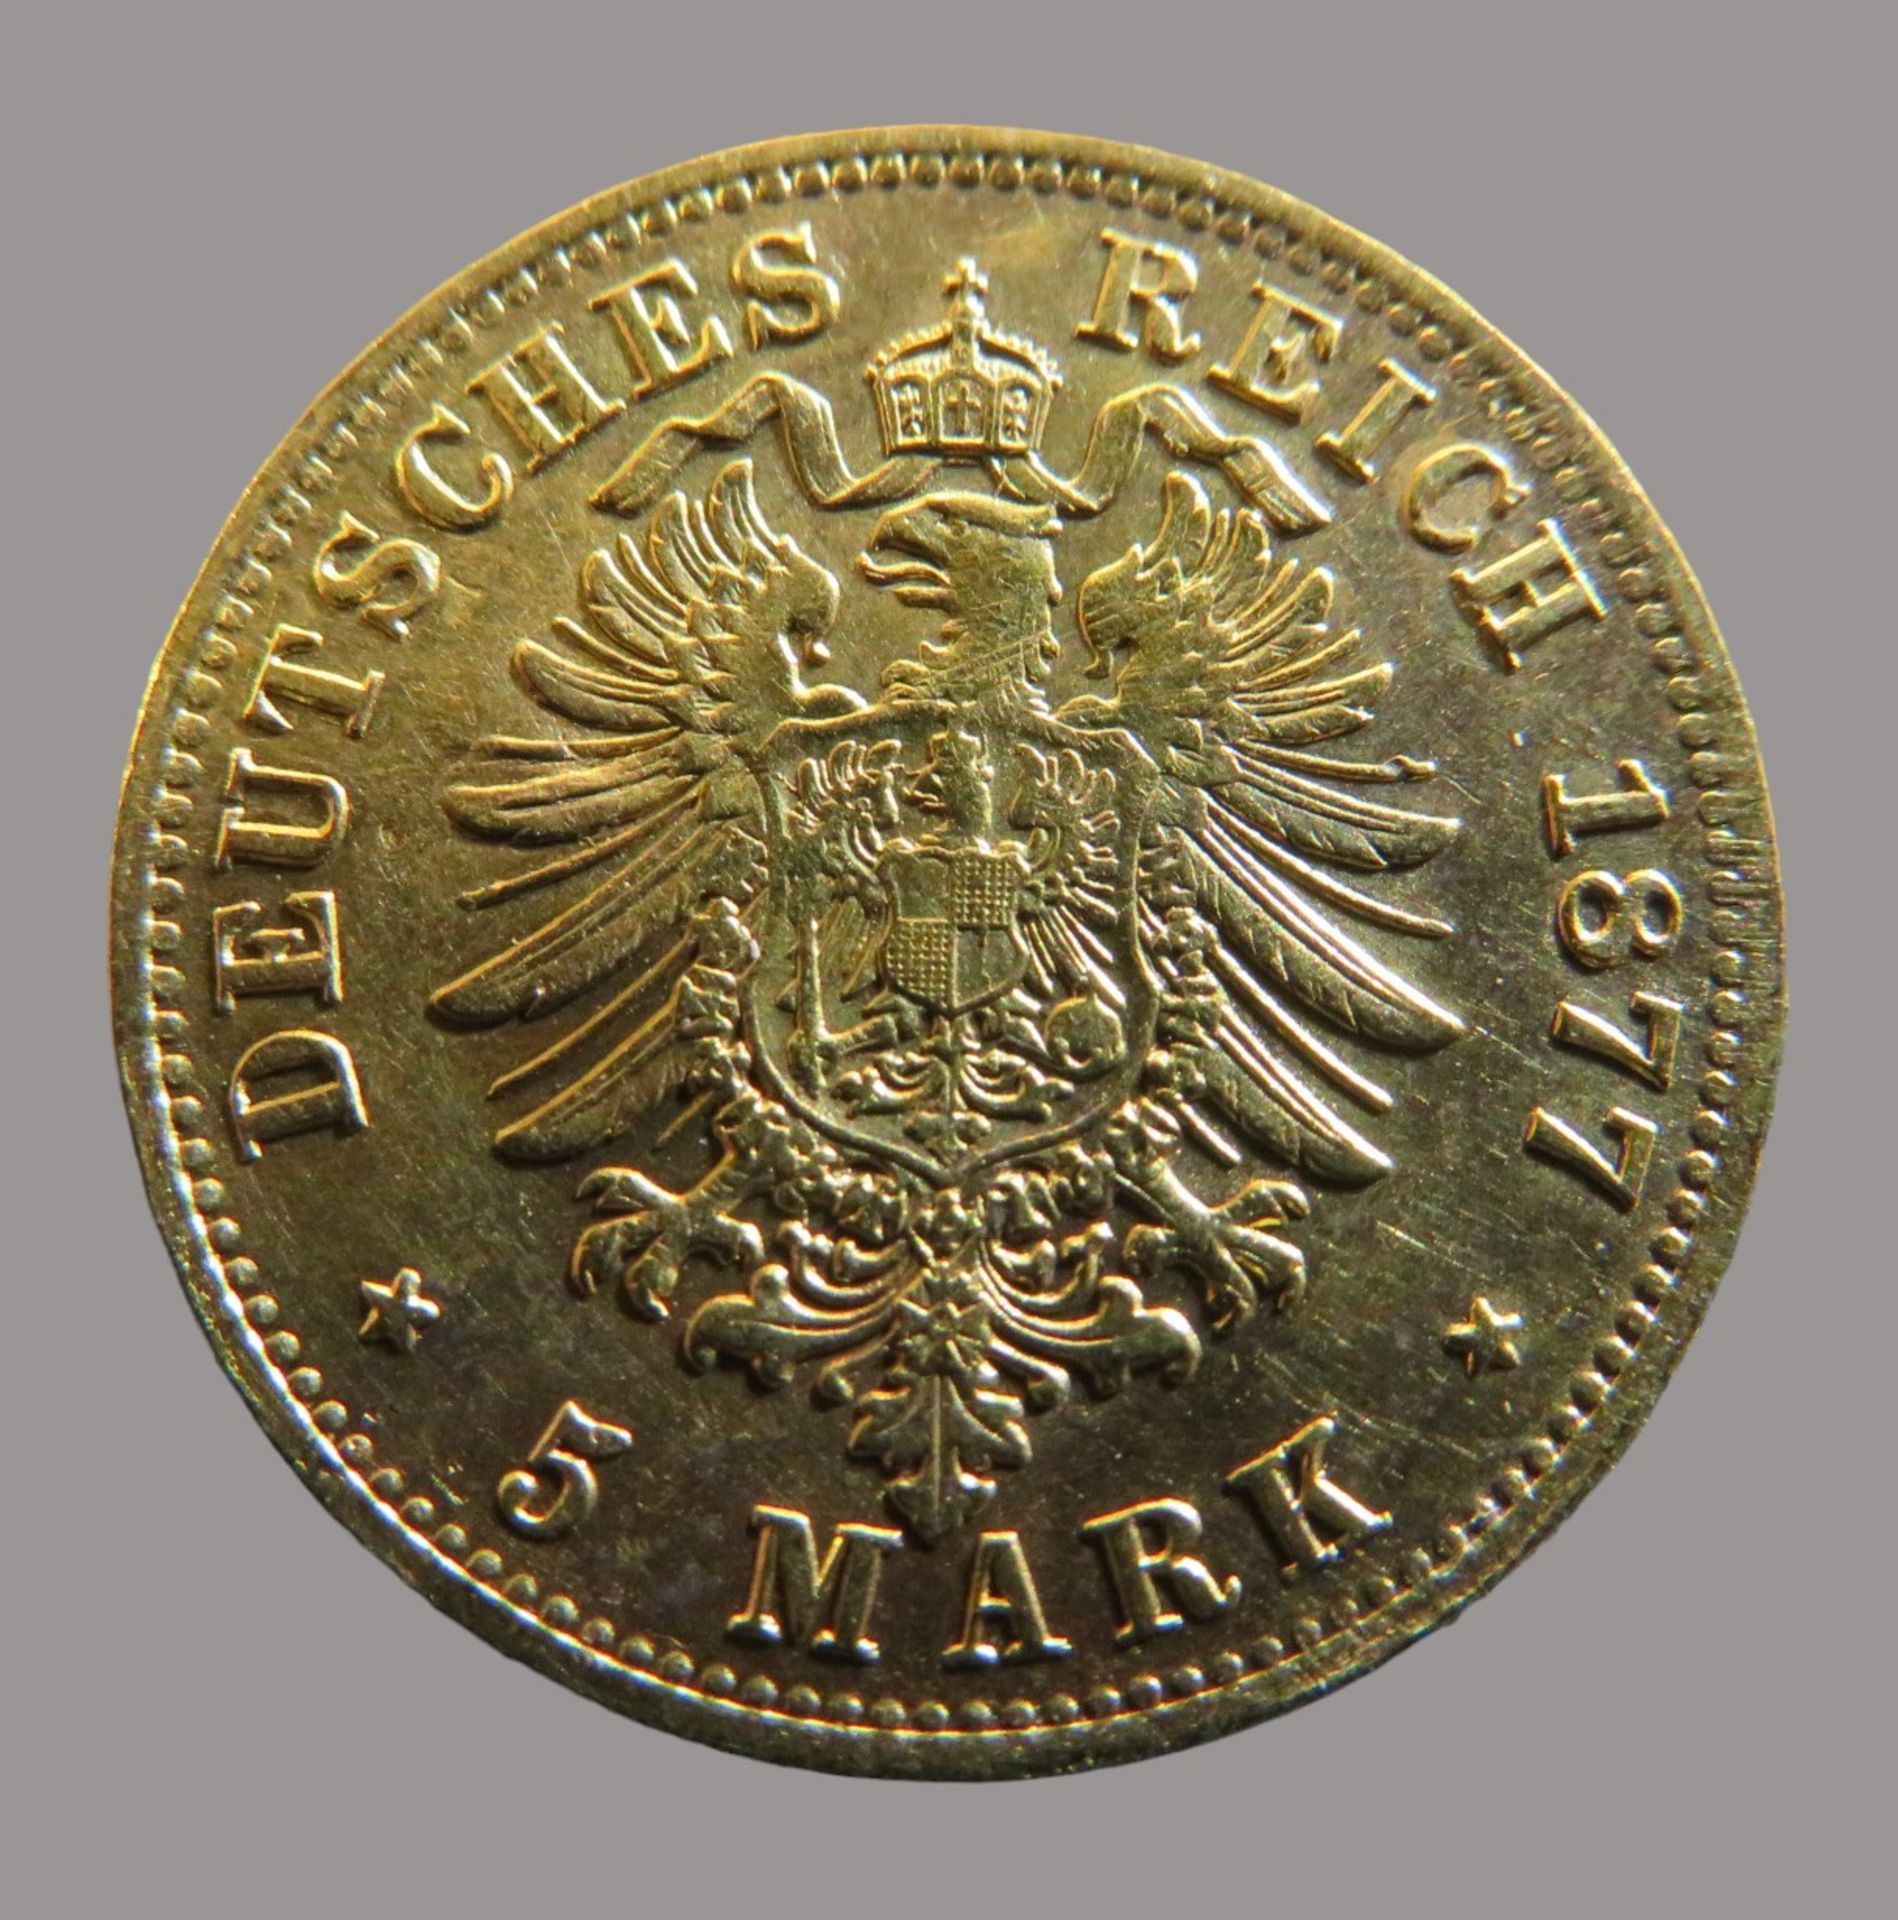 Goldmünze, 5 Mark, Albert König von Sachsen, 1877E, Gold 900/000, 1,99 g, J 260, d 1,7 cm. - Image 2 of 2